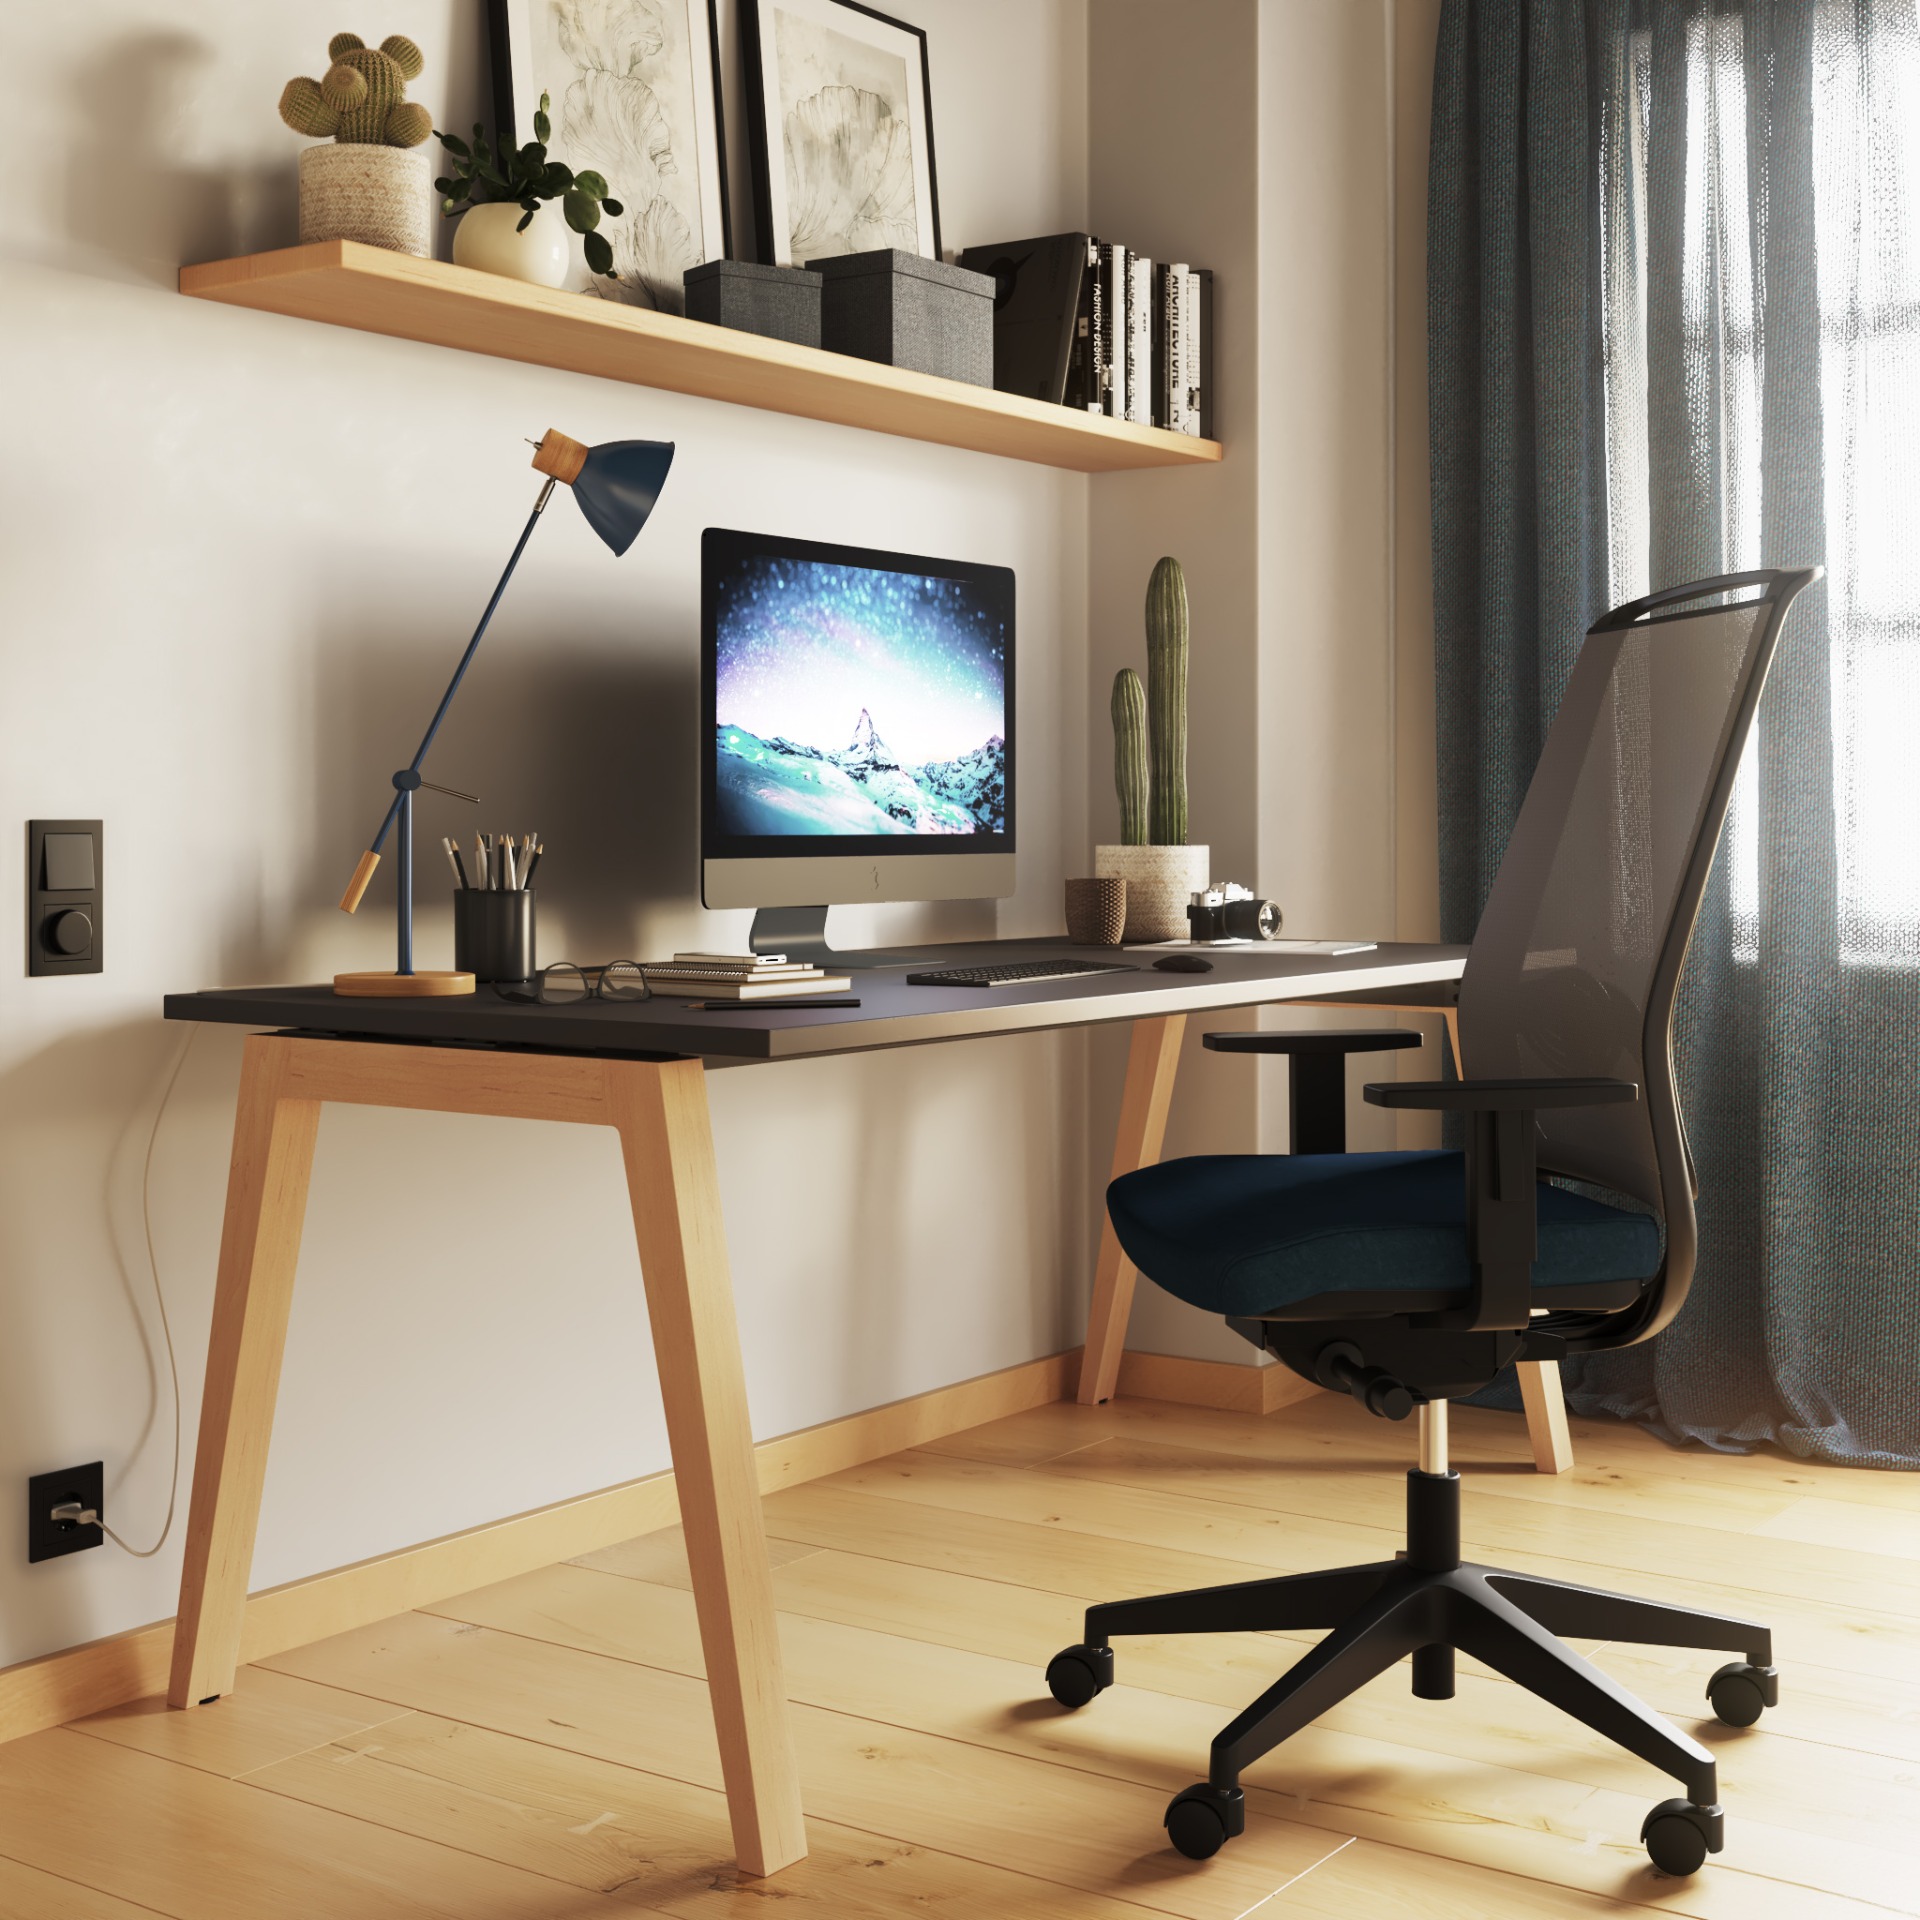 Imagen-Mobiliari d'oficina per a Home Office-850